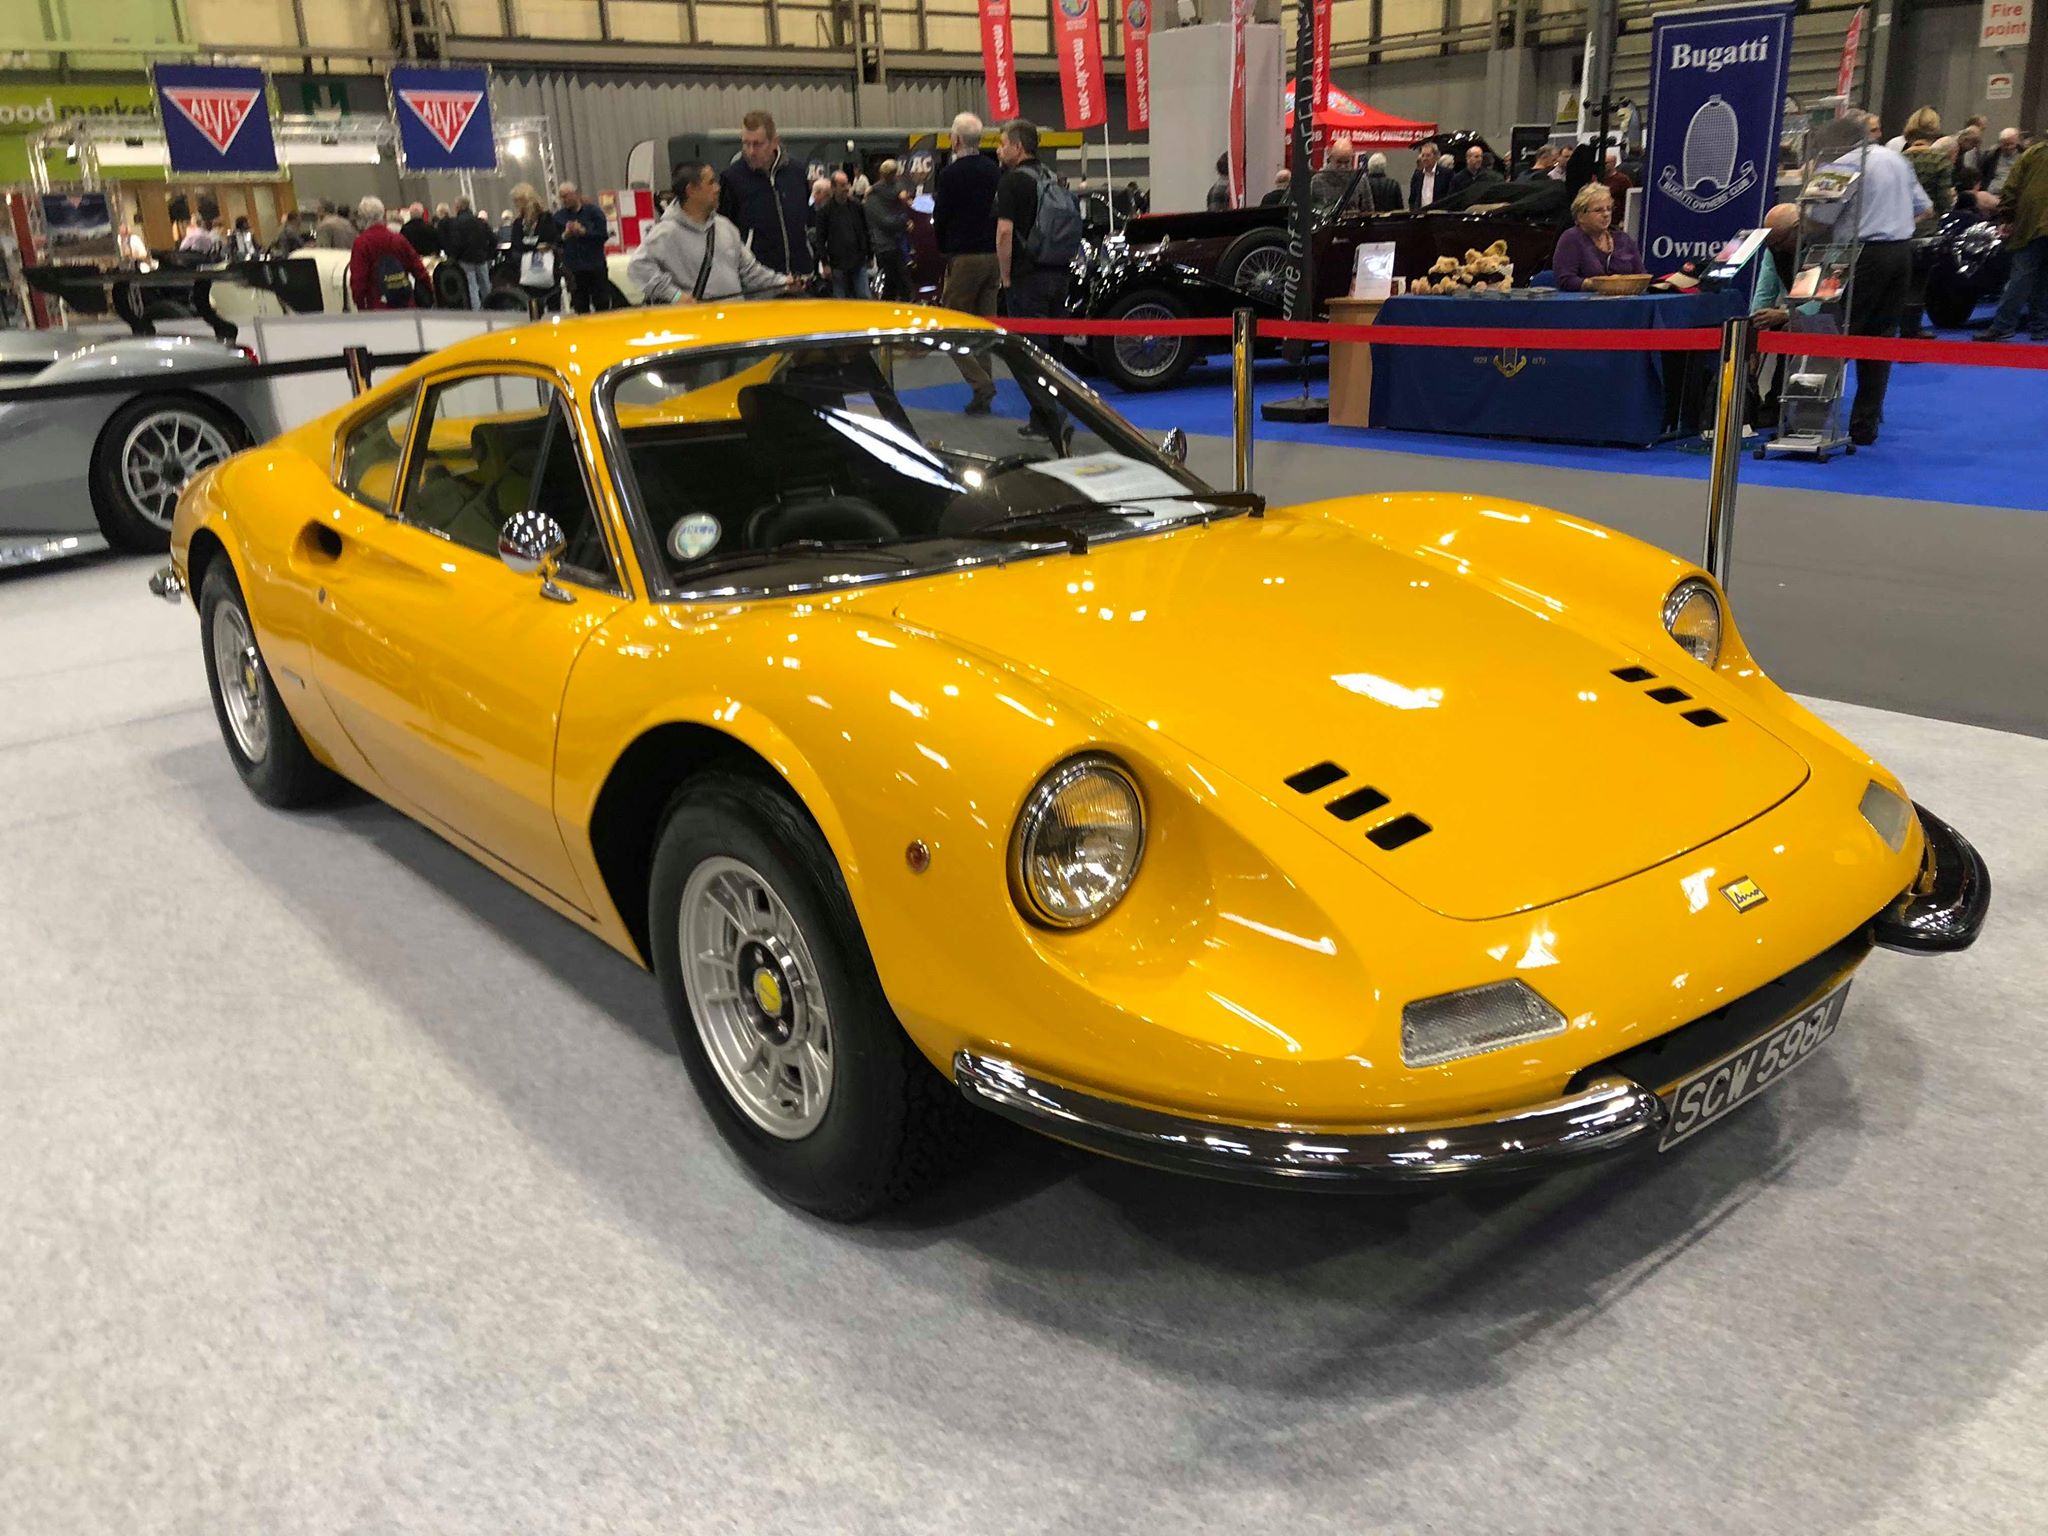 Yellow Ferrari